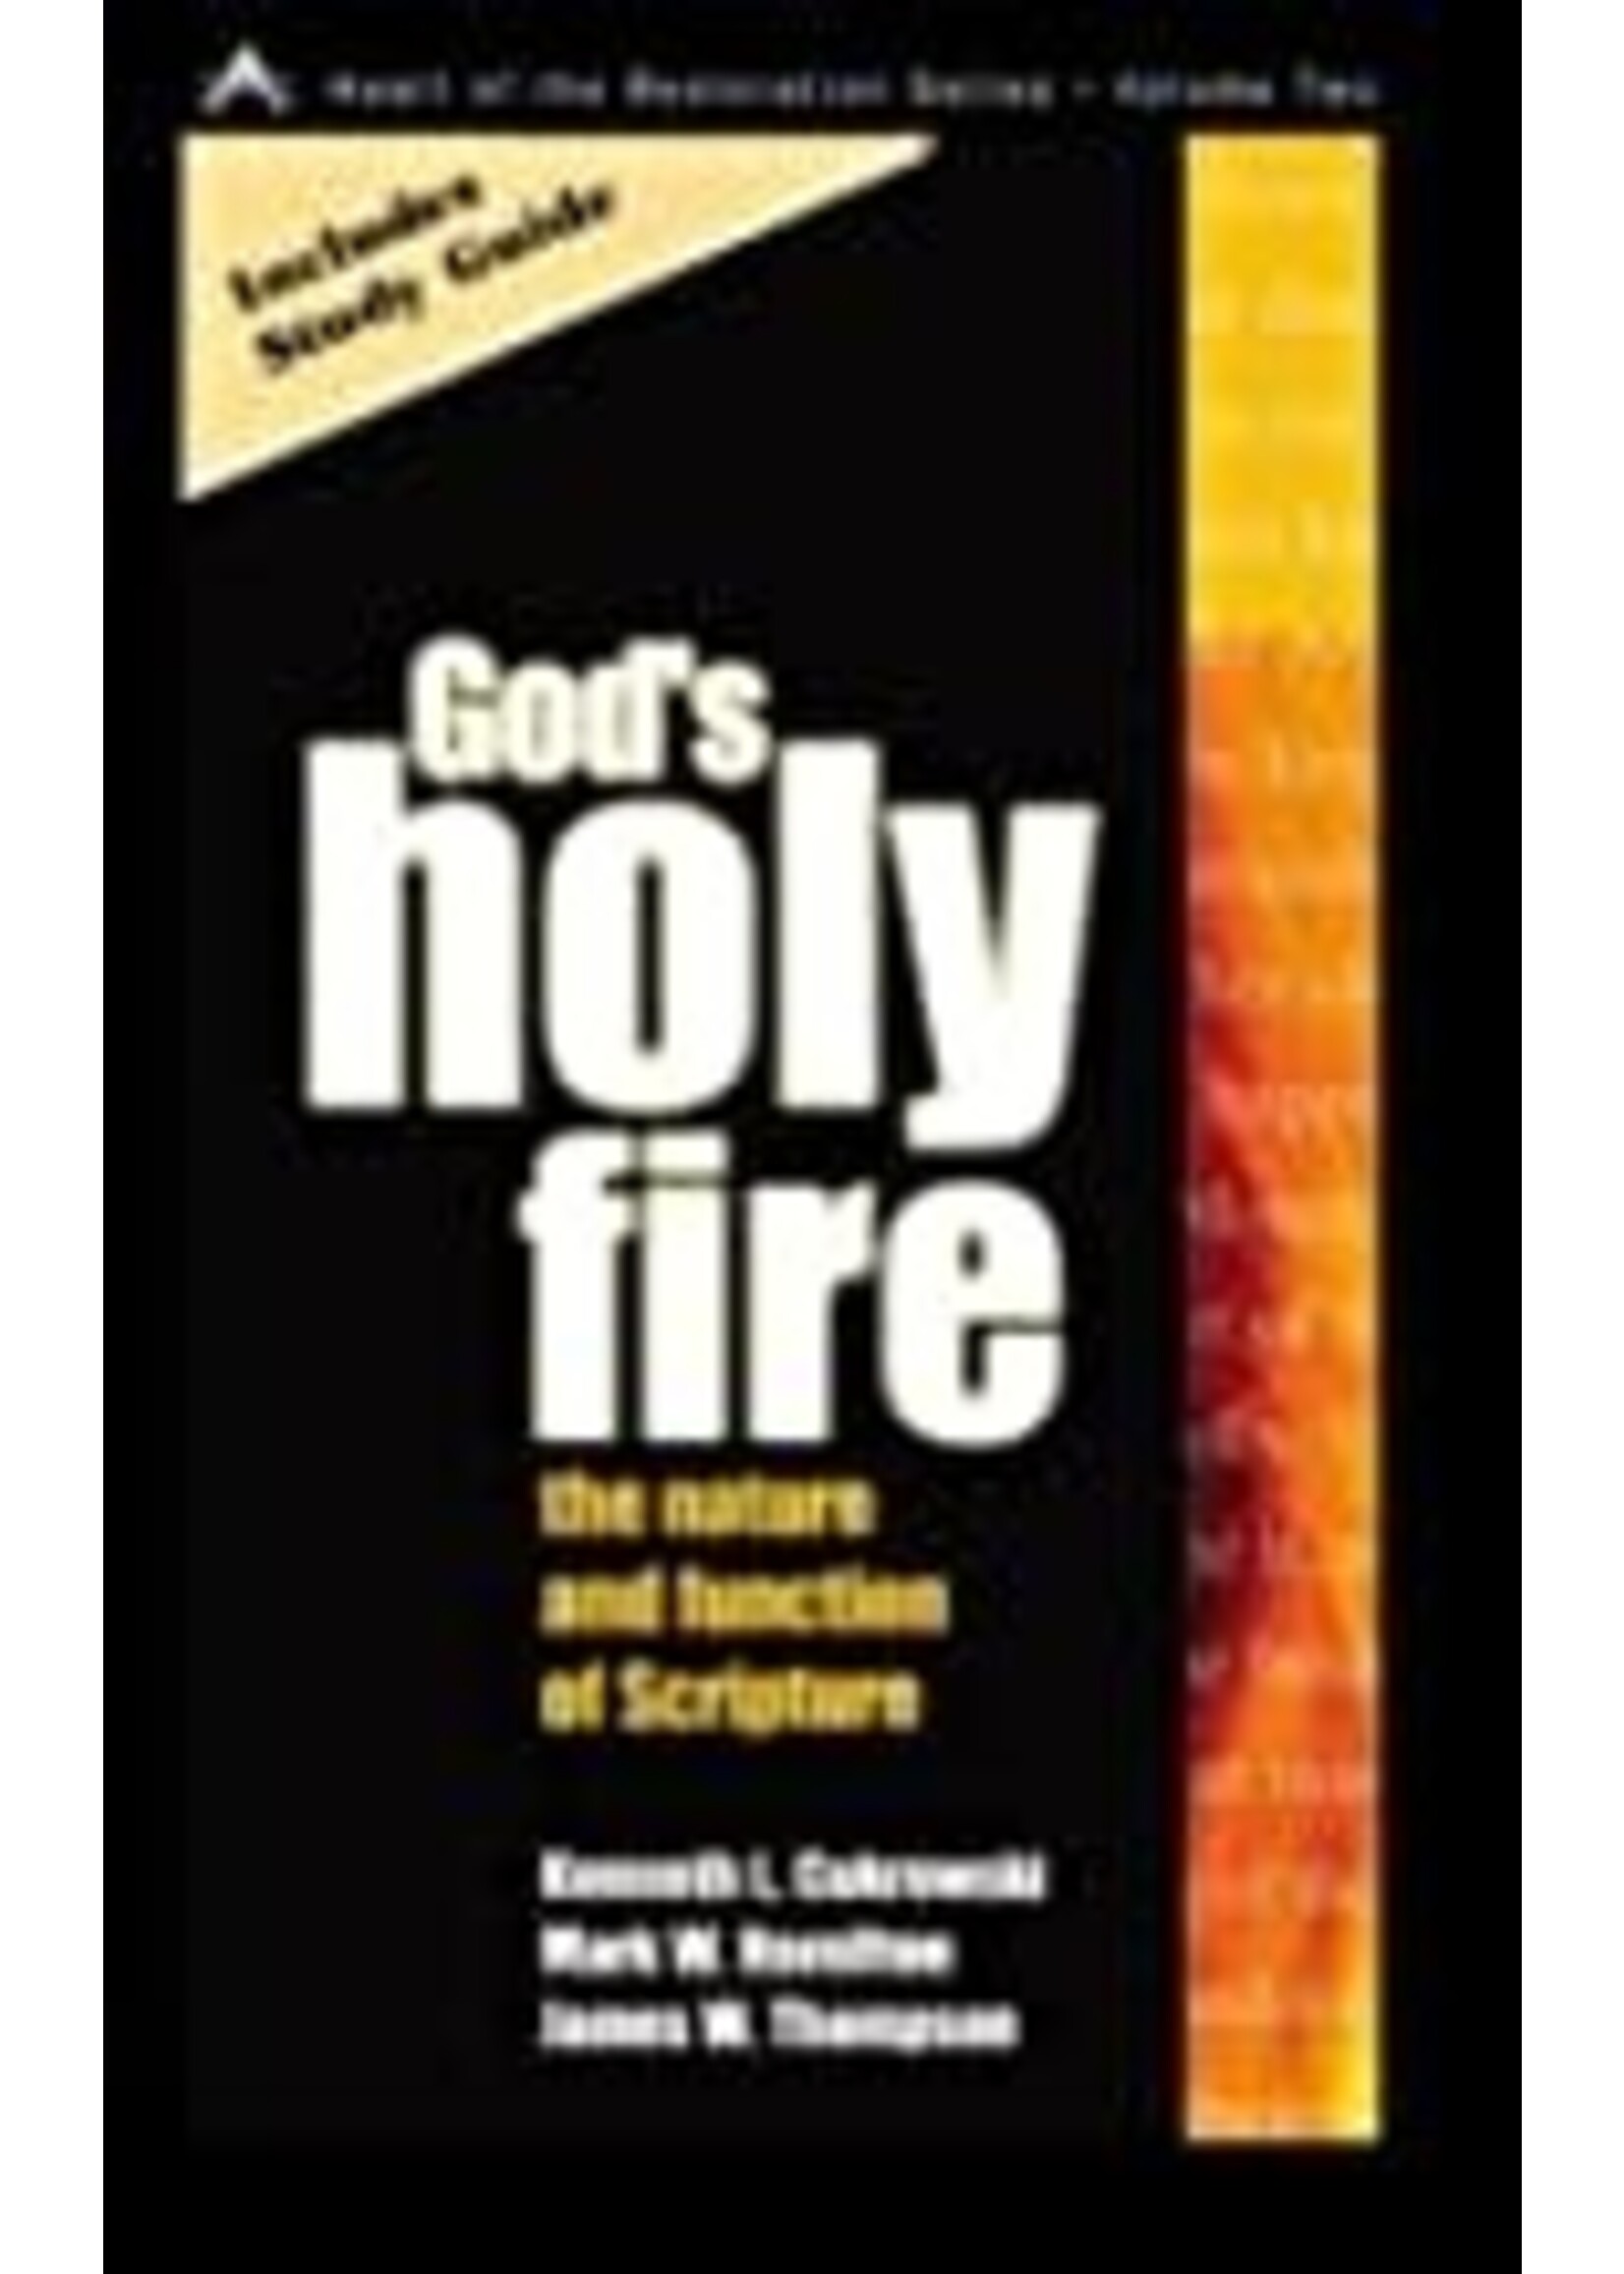 GODS HOLY FIRE